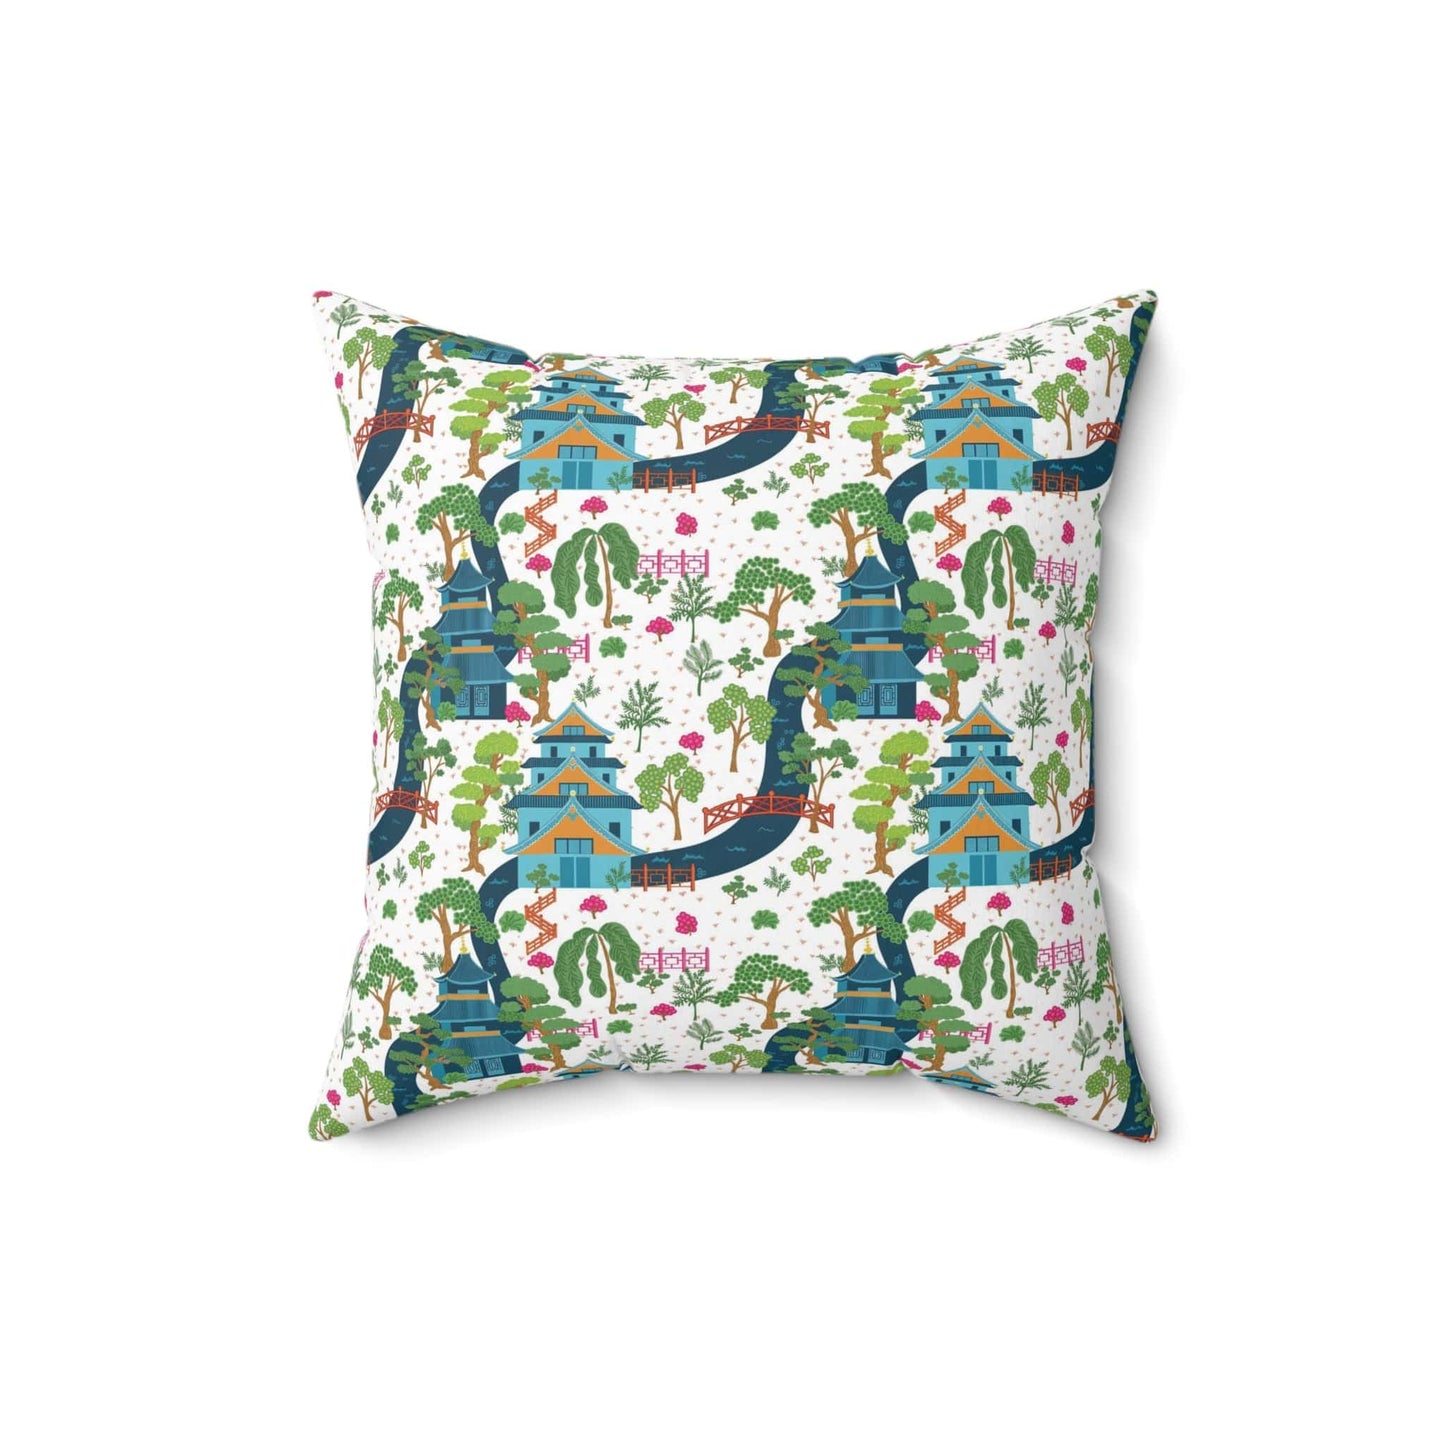 Kate McEnroe New York Chinoiserie Pagoda Garden Pillow with Insert, Oriental Scenic Cushion, Asian-Inspired Throw Pillow KM13819925 Throw Pillows 16" × 16" 17309563127731726252